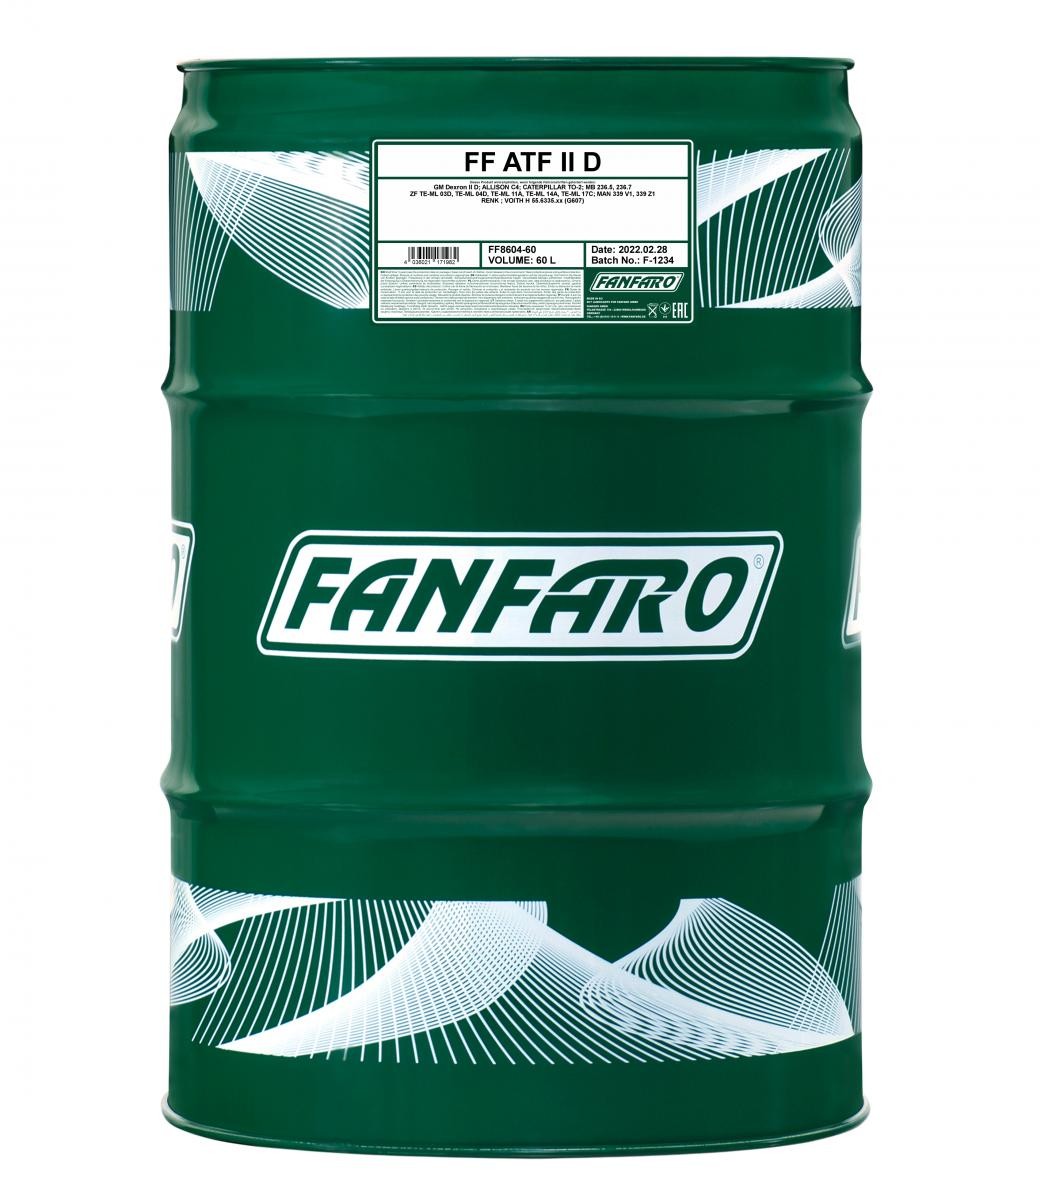 FANFARO ATF II D ATF II, 60l Automatic transmission oil FF8604-60 buy